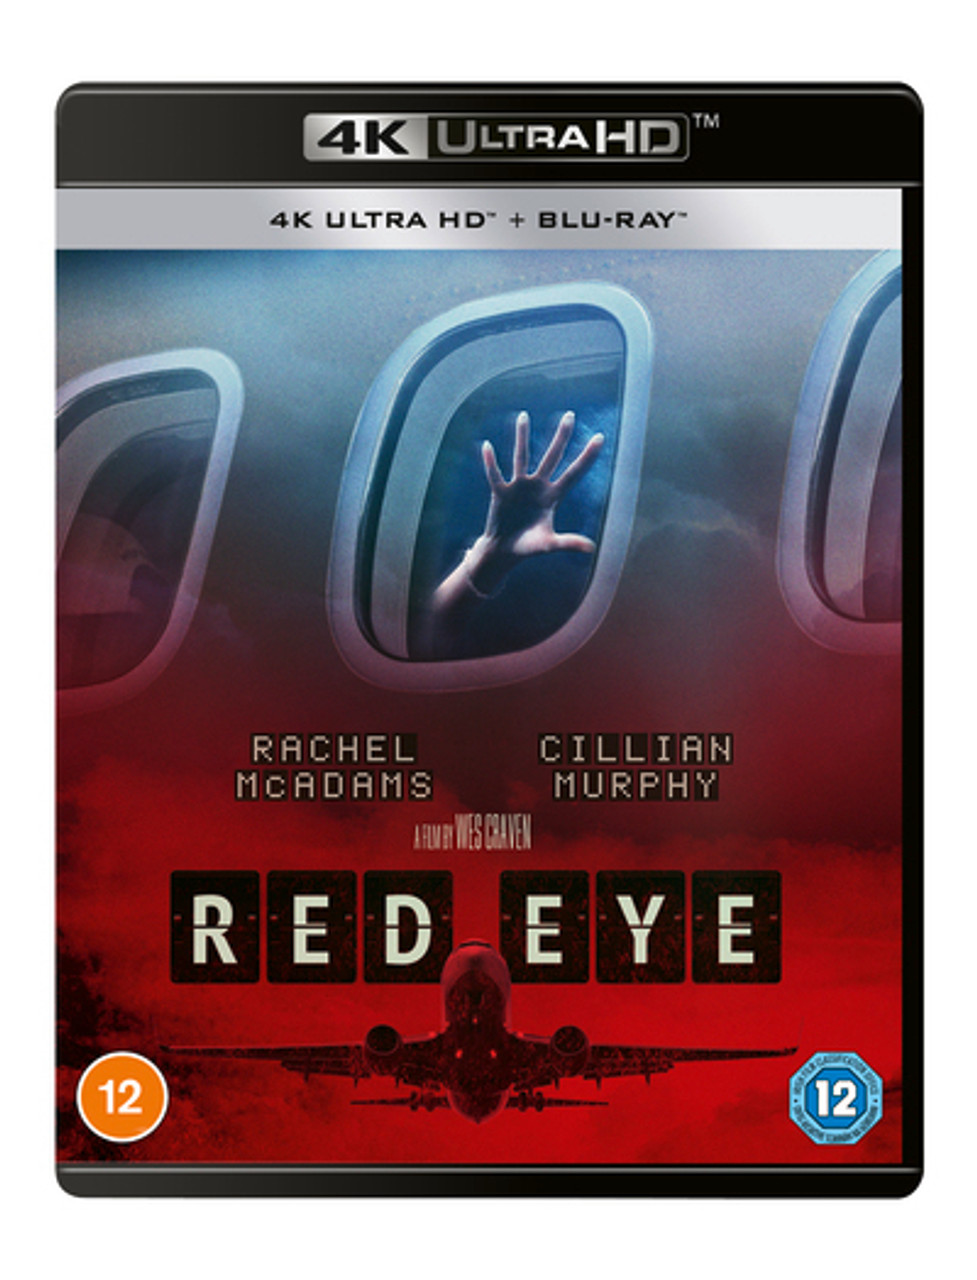 Eye on UHD: 14 Ultra HD Blu-ray Movies Reviewed